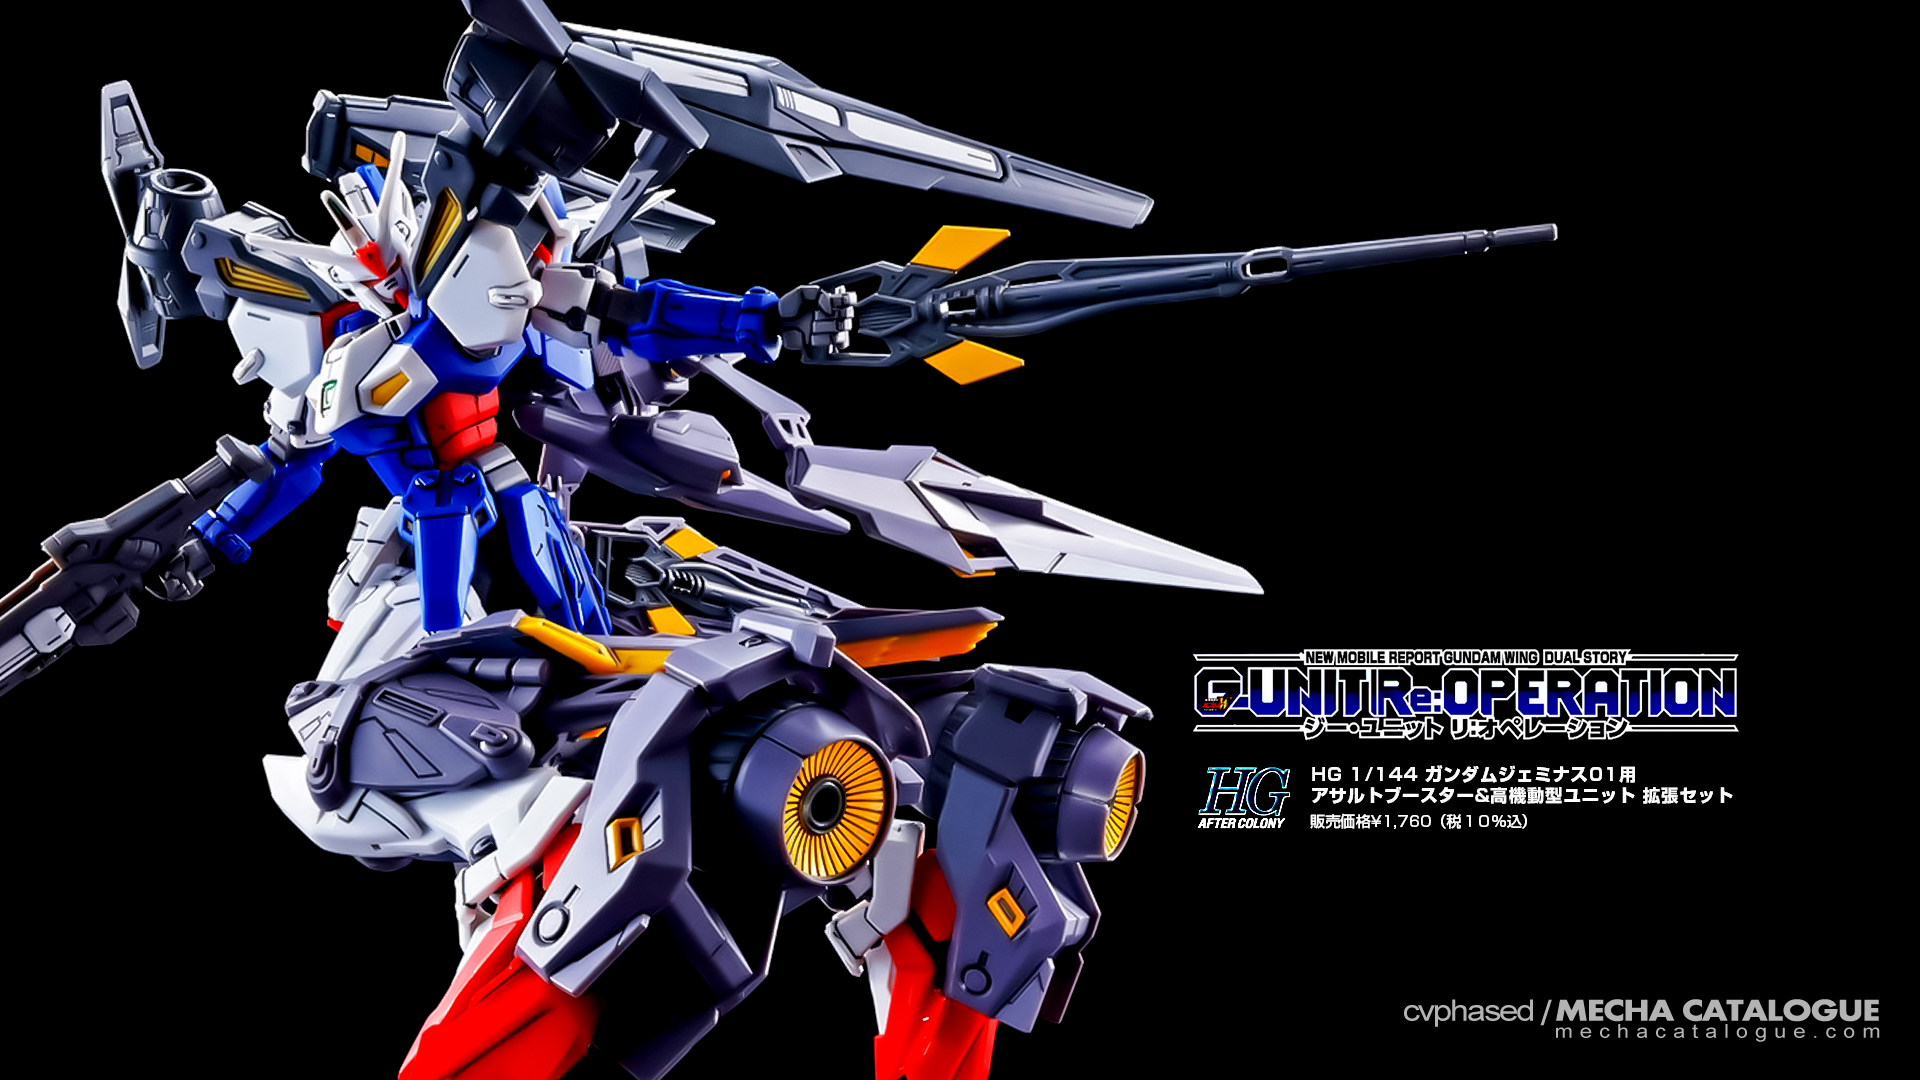 G-UNIT Re:OPERATION! HGAC Gundam Geminass 01 Assault Booster & High Mobility Unit Expansion Set